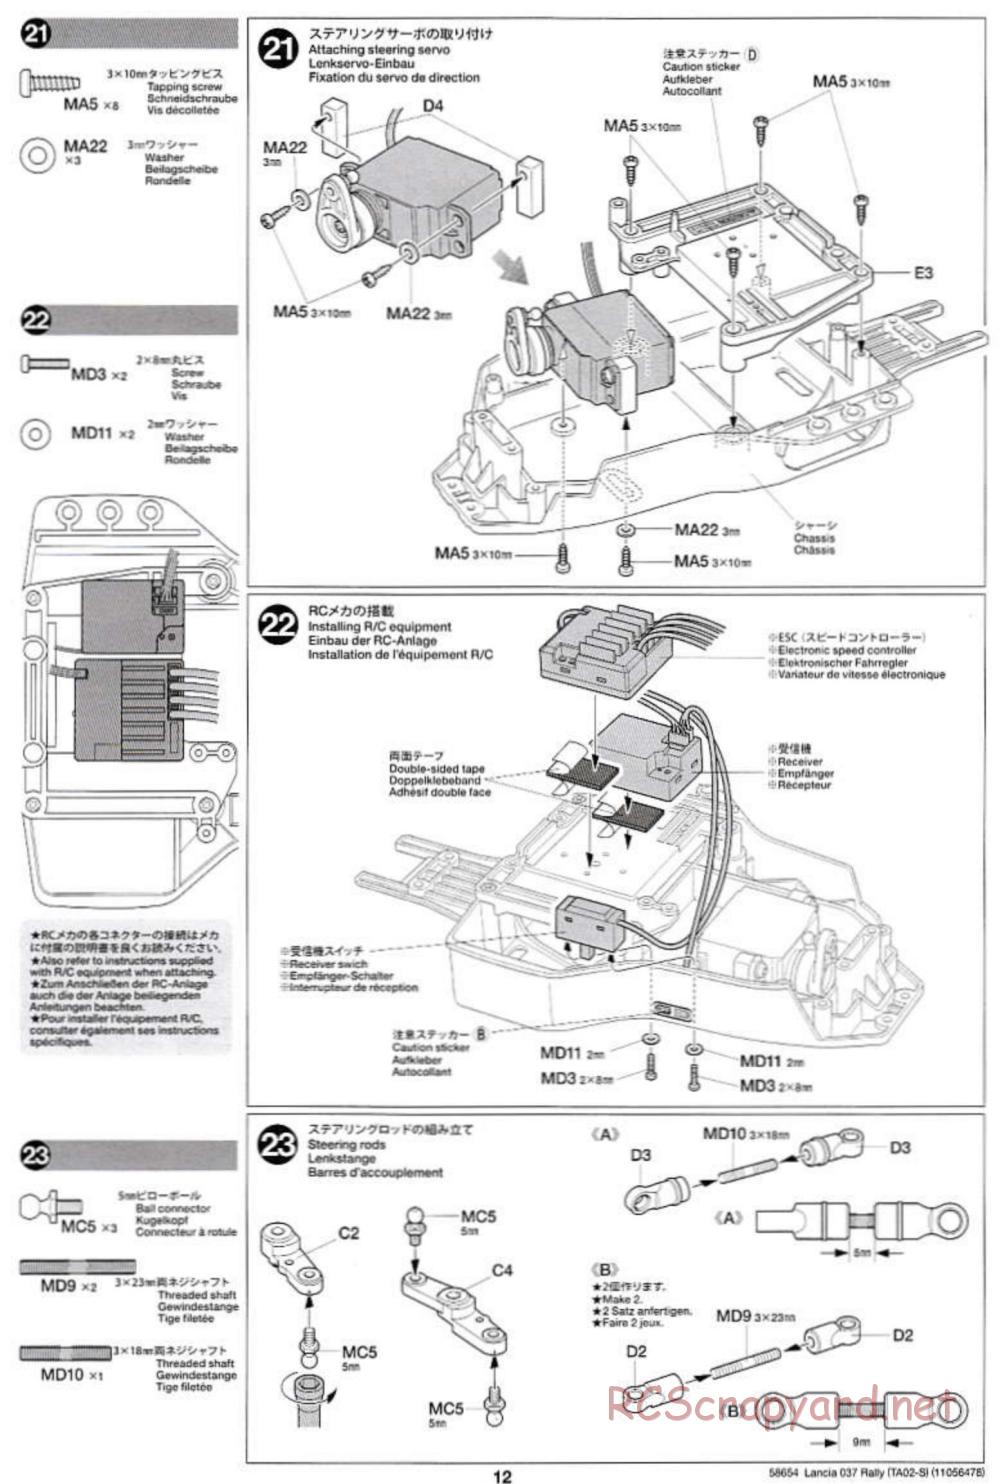 Tamiya - Lancia 037 Rally Chassis - Manual - Page 12